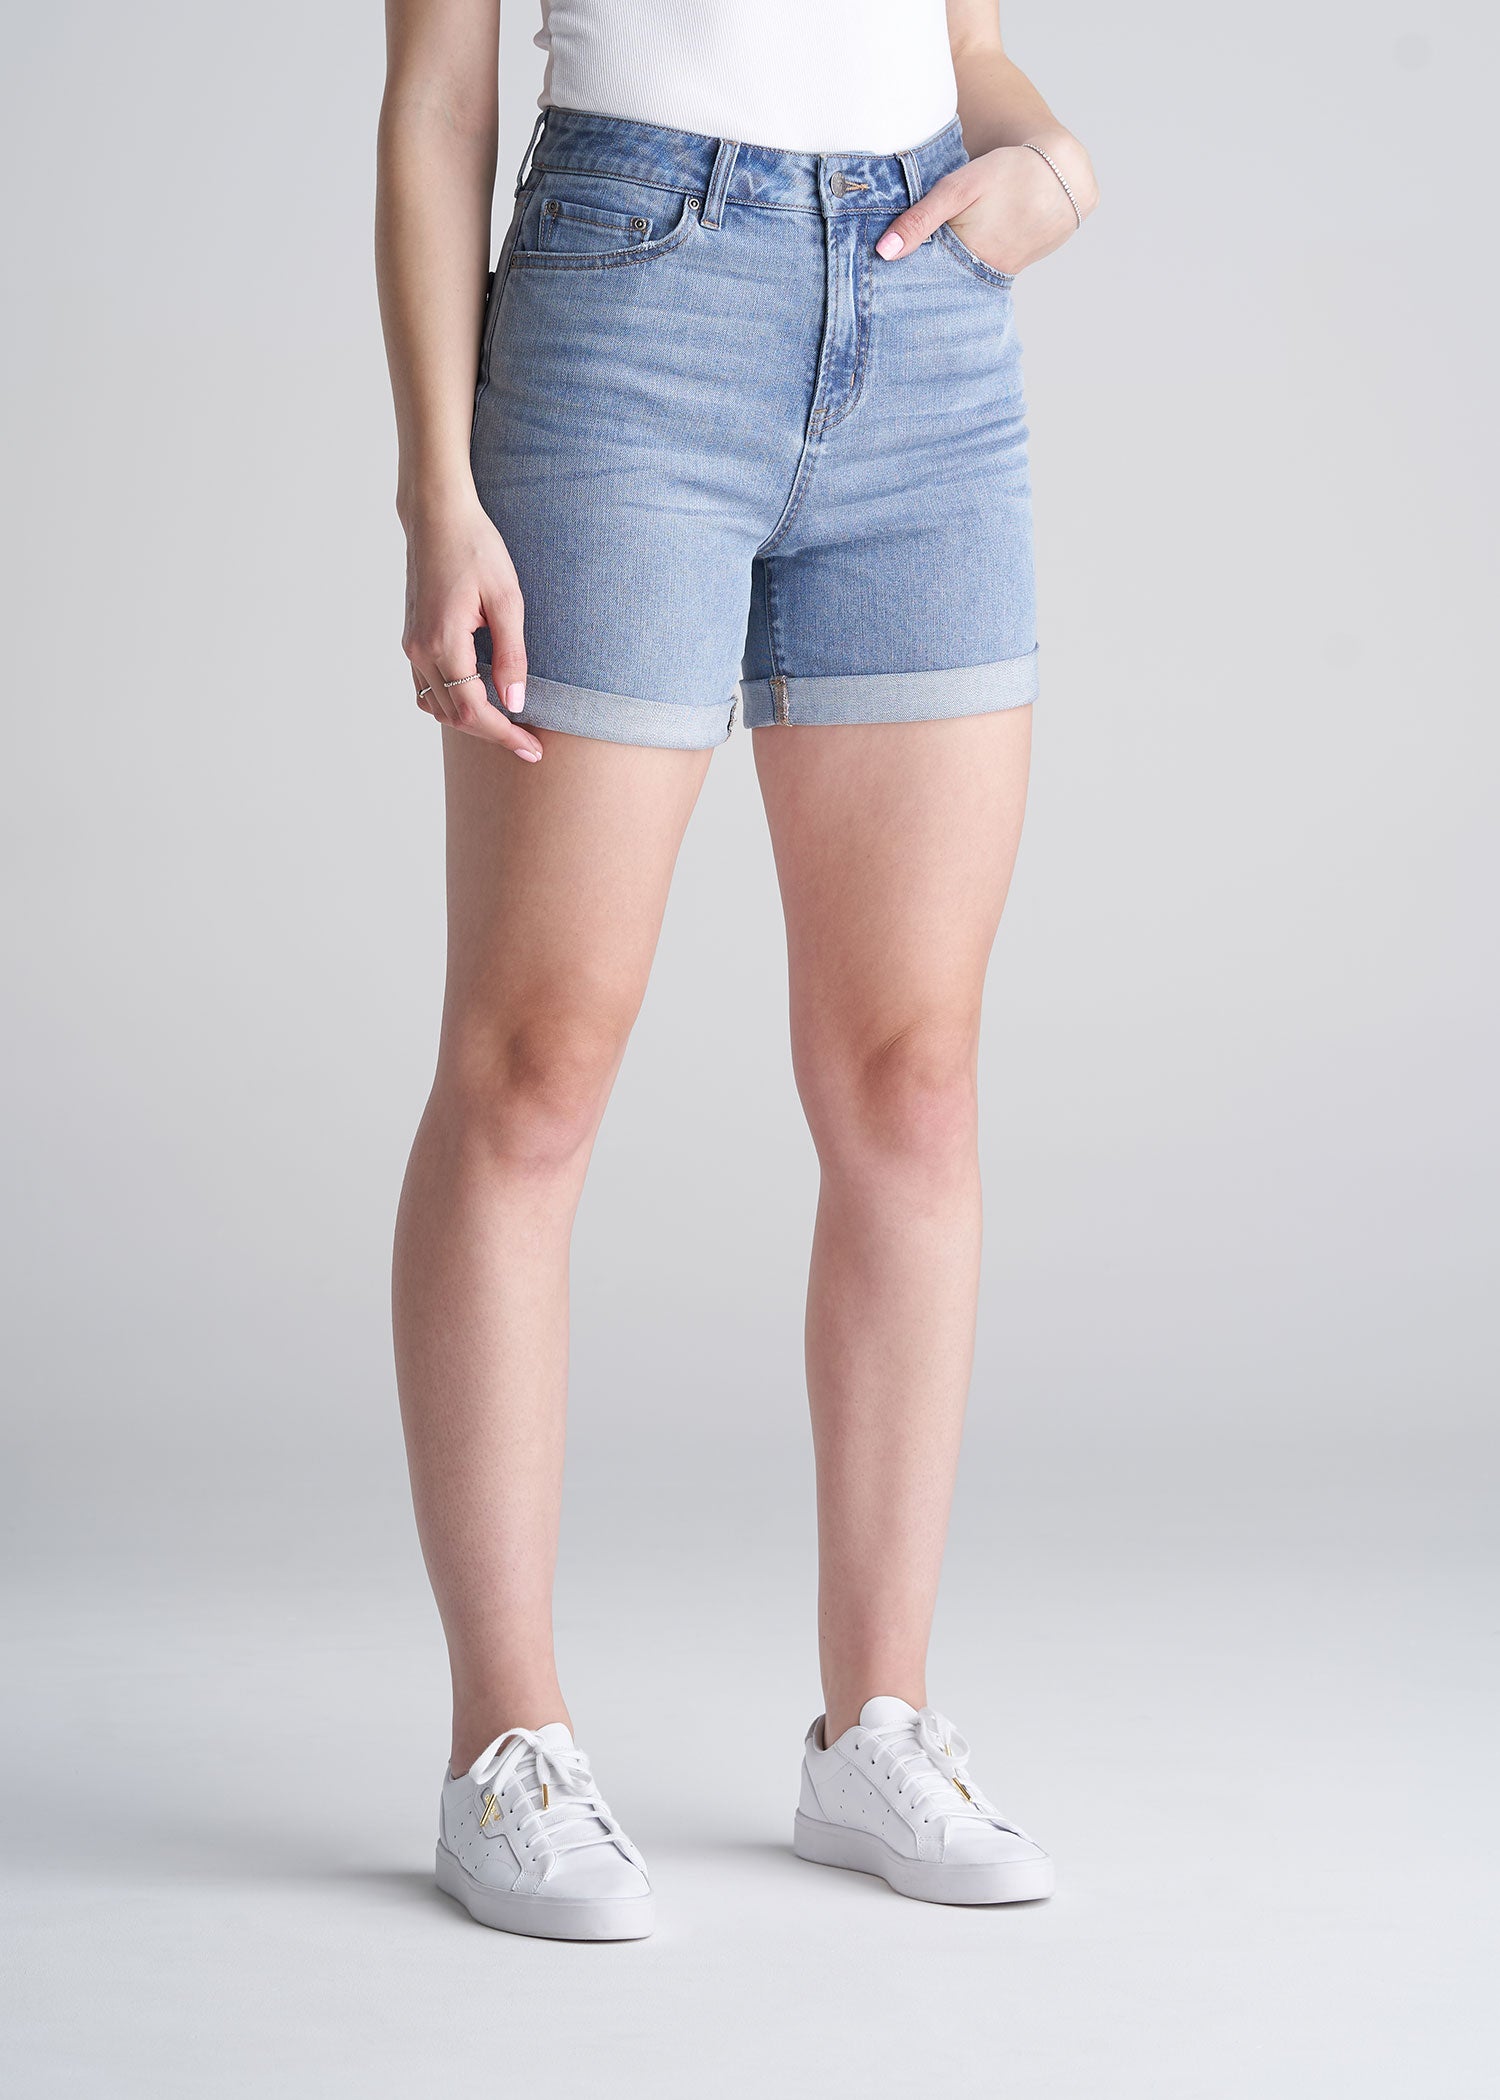 American_Tall_Womens_denim_shorts_Light_Blue-pocket-front